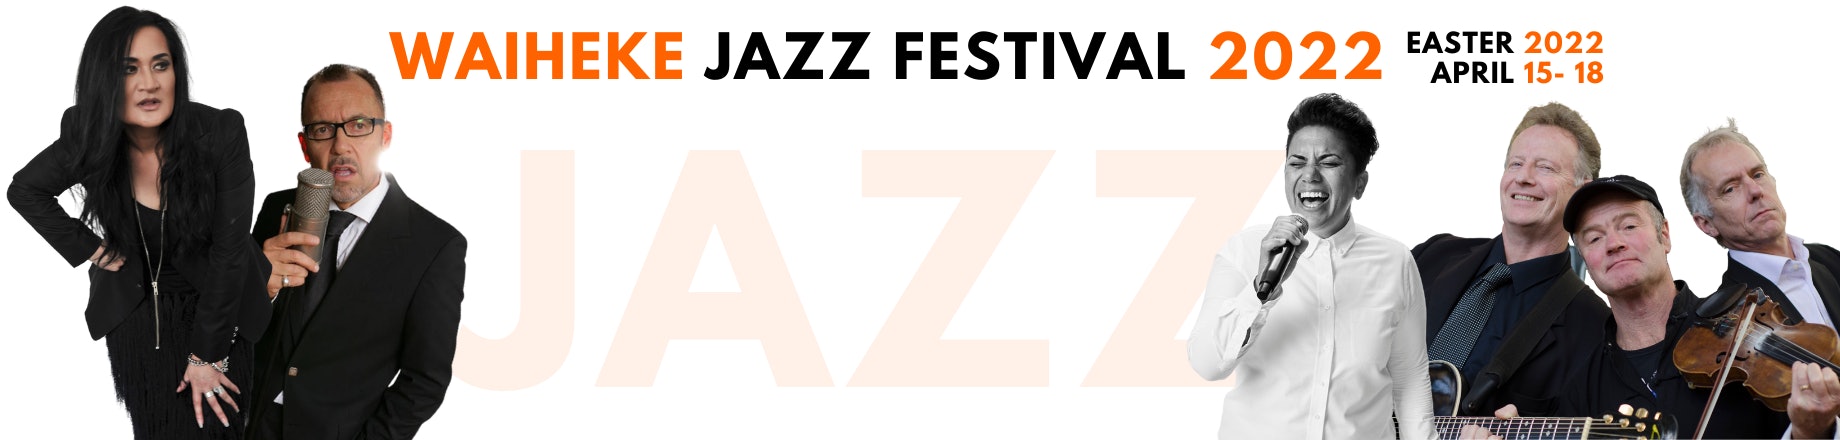 Waiheke Jazz Festival 2022